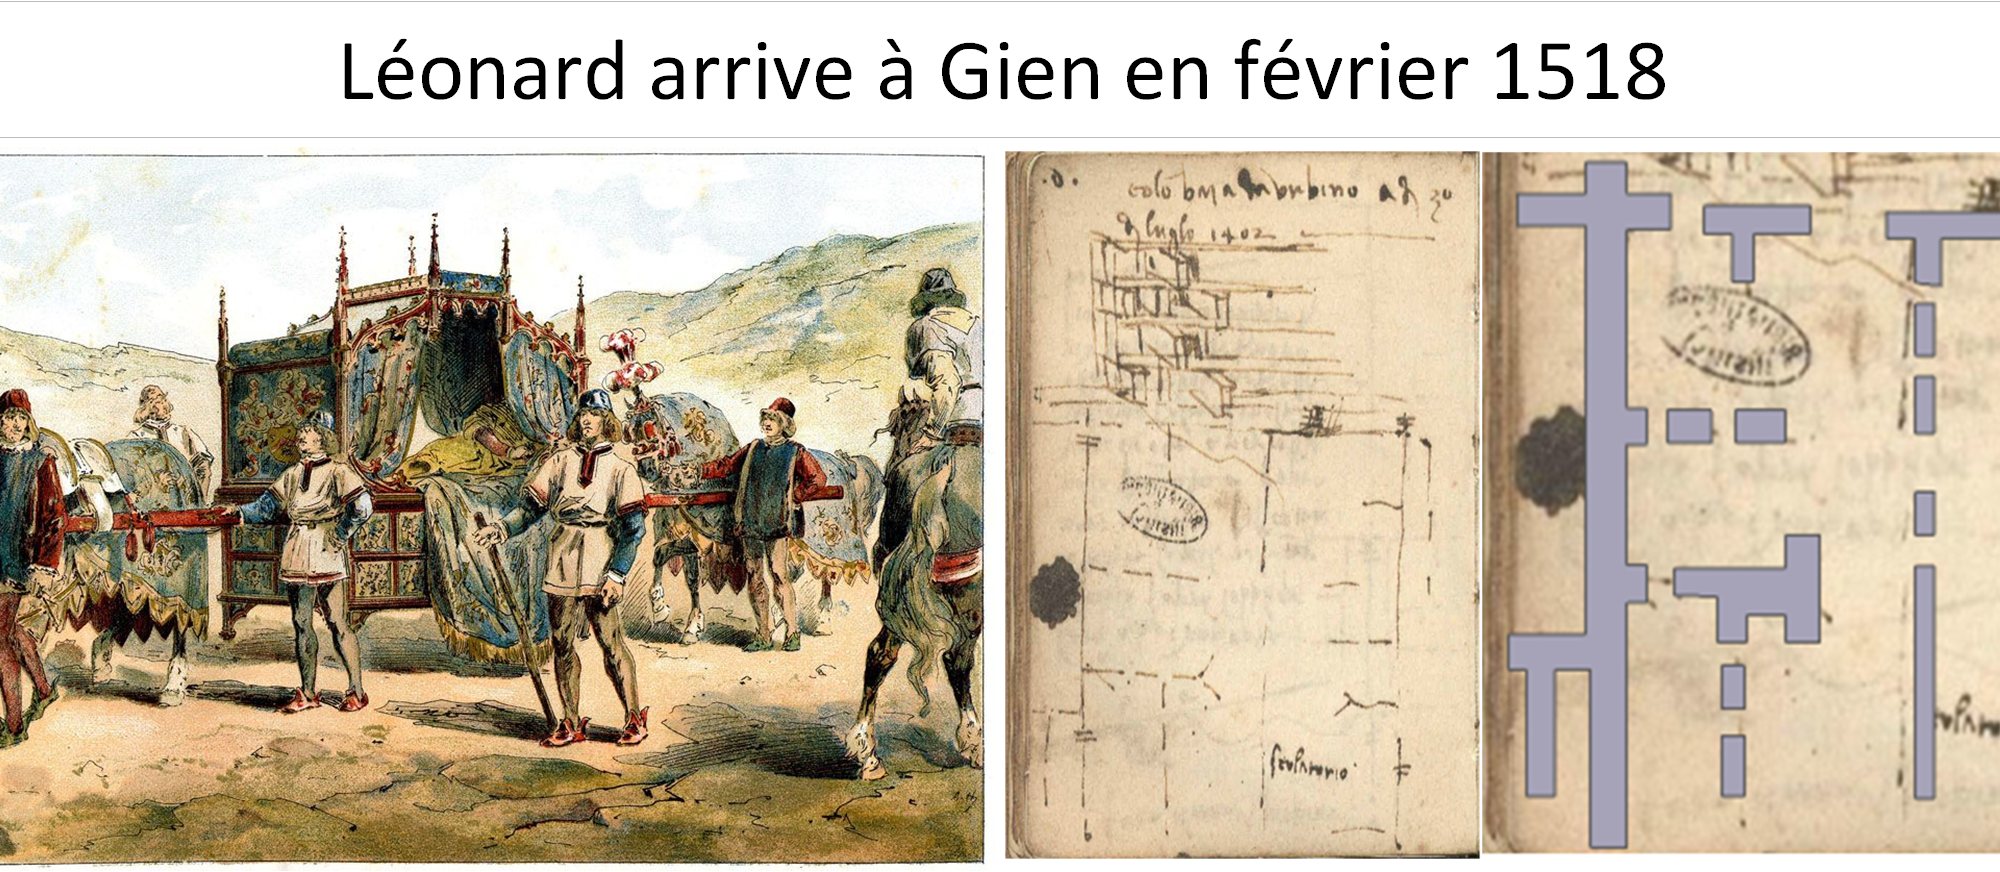 Léonard arrive à Gien en février 1518